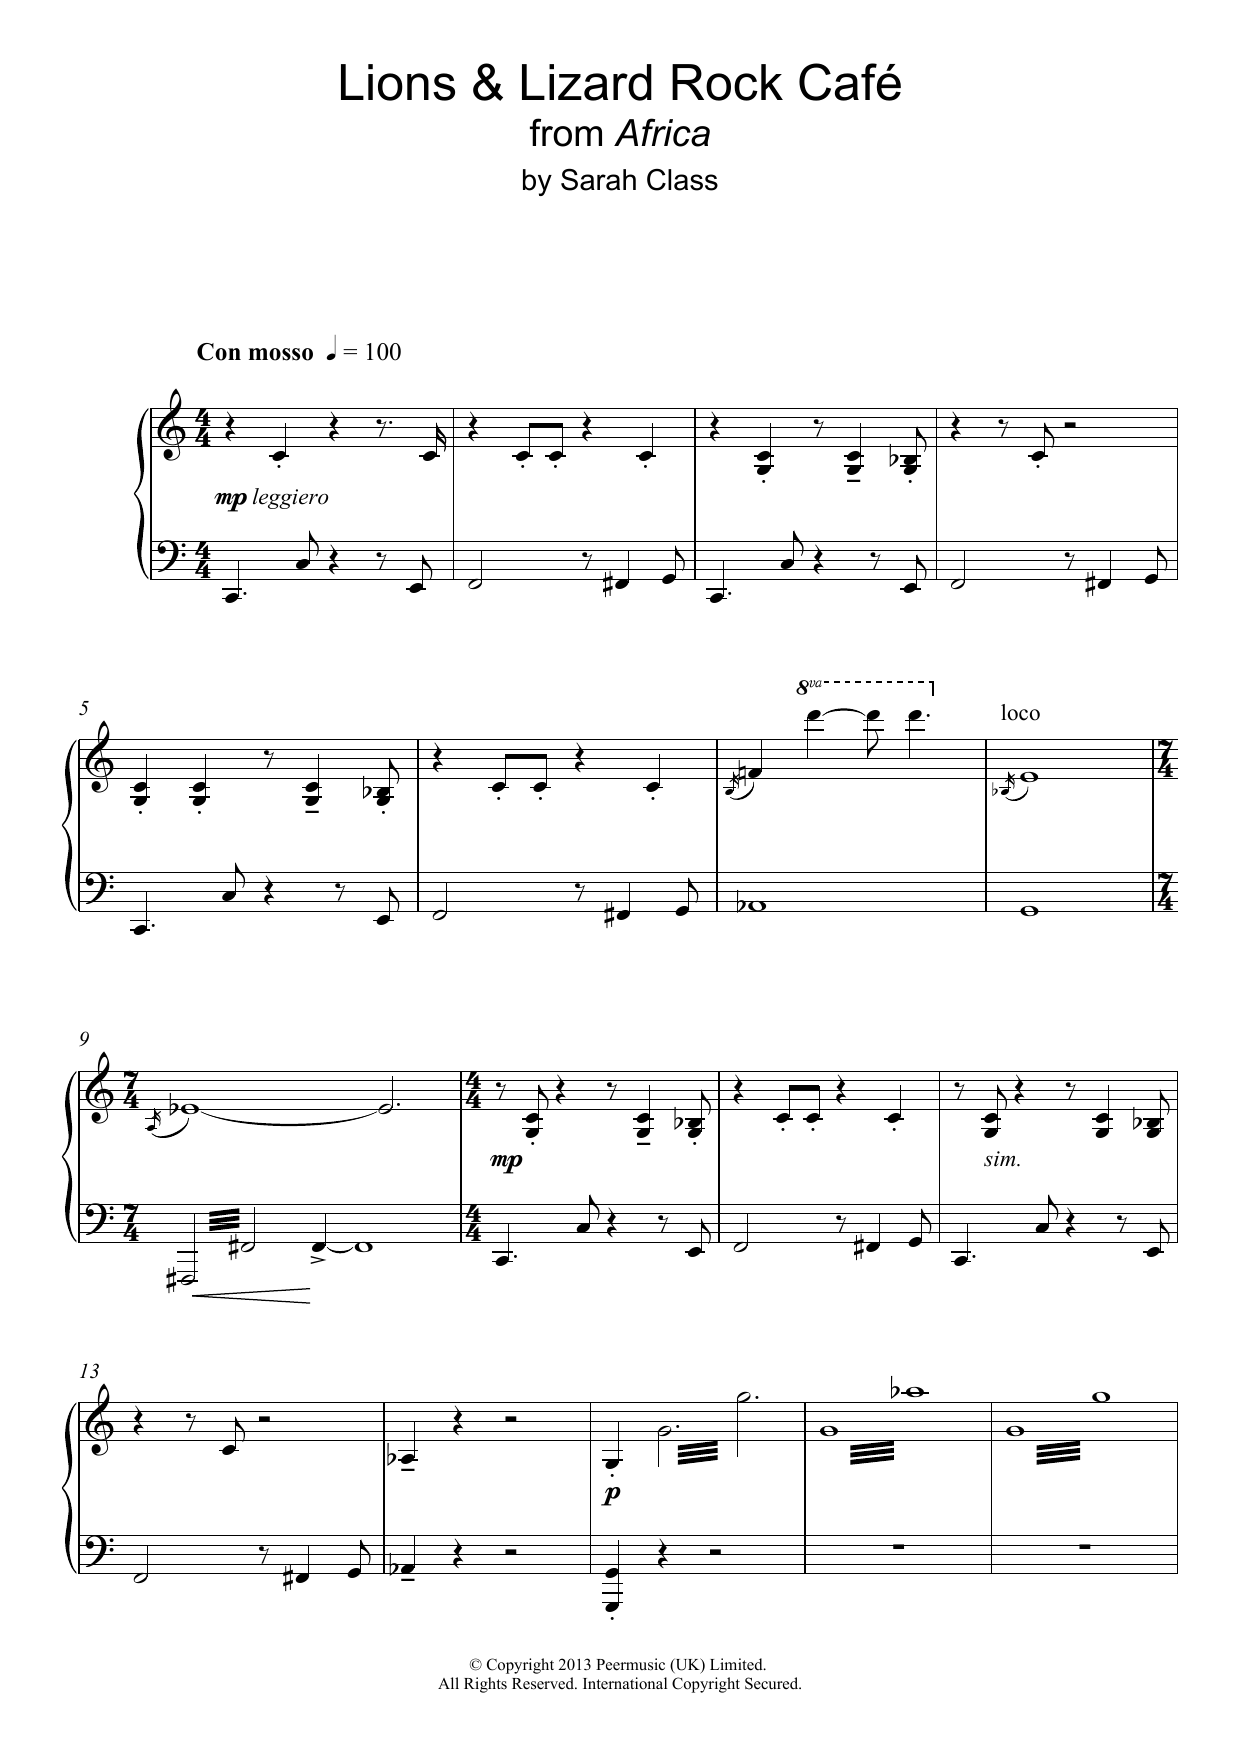 Sarah Class Lions & Lizards Rock Café Sheet Music Notes & Chords for Piano - Download or Print PDF